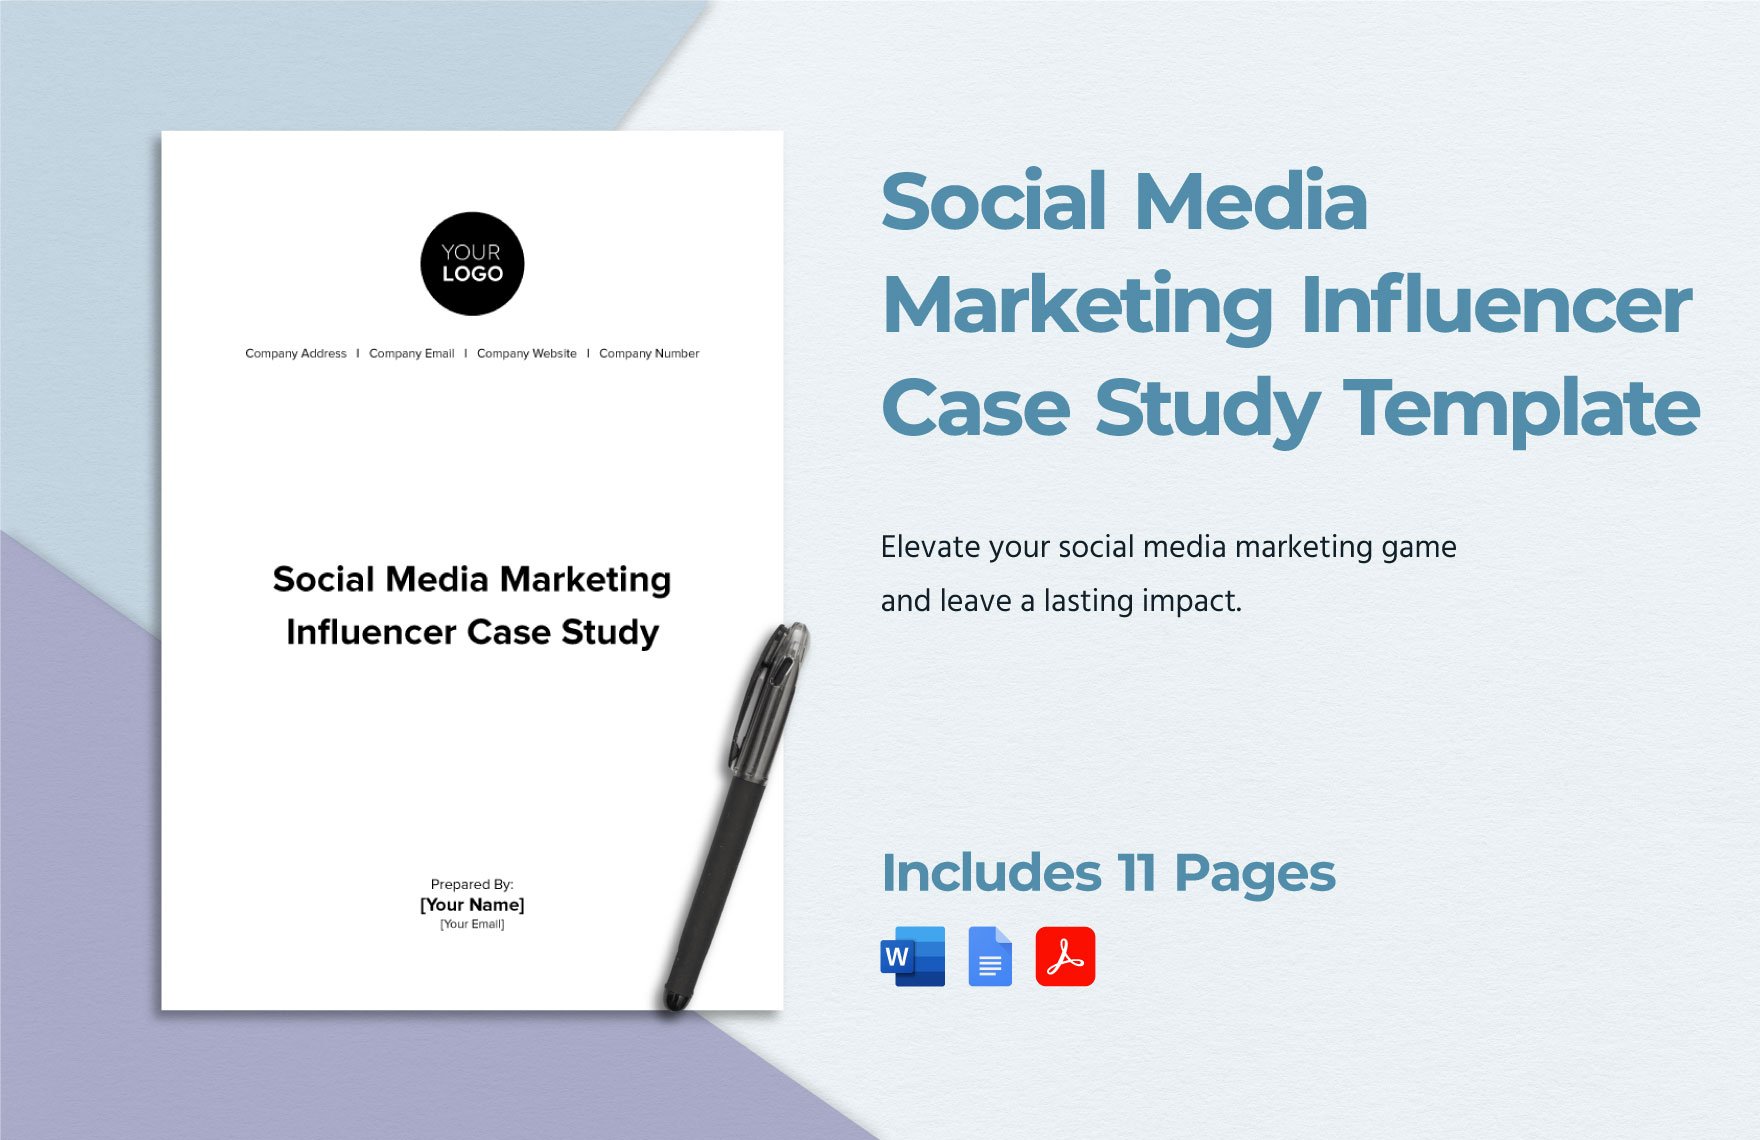 Social Media Marketing Influencer Case Study Template